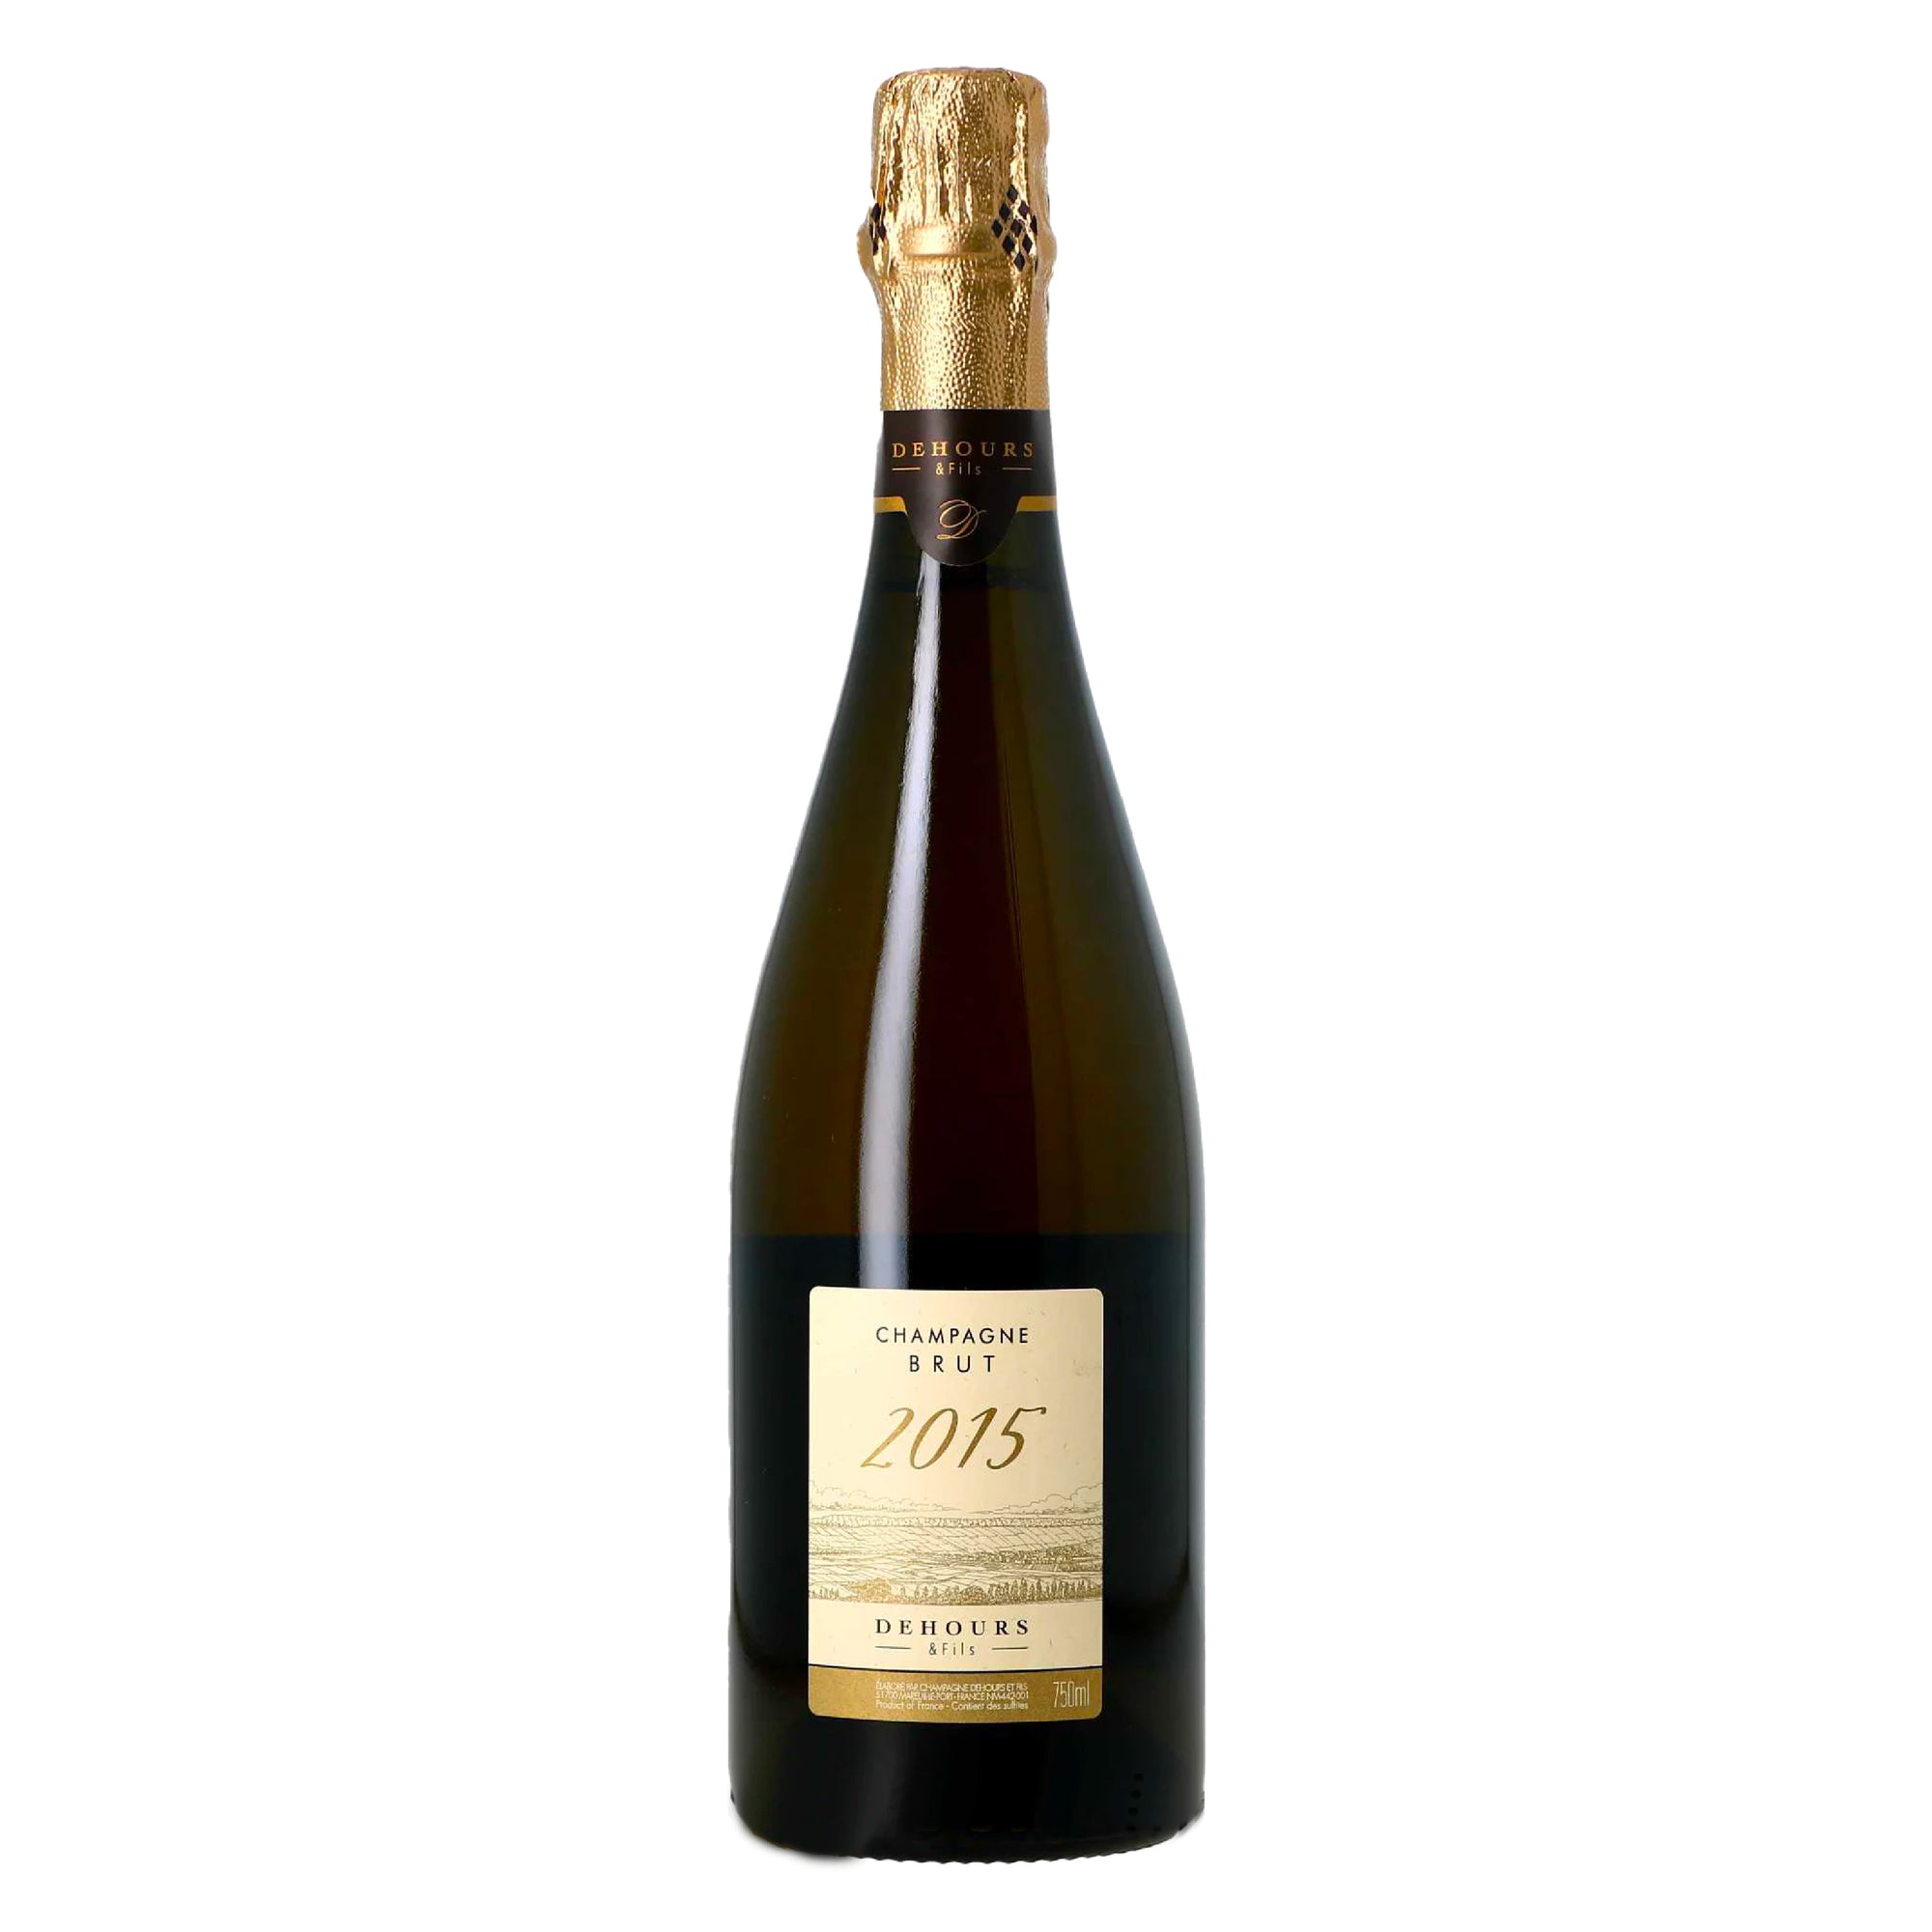 DEHOURS & FILS Champagne Brut Millesime 2015